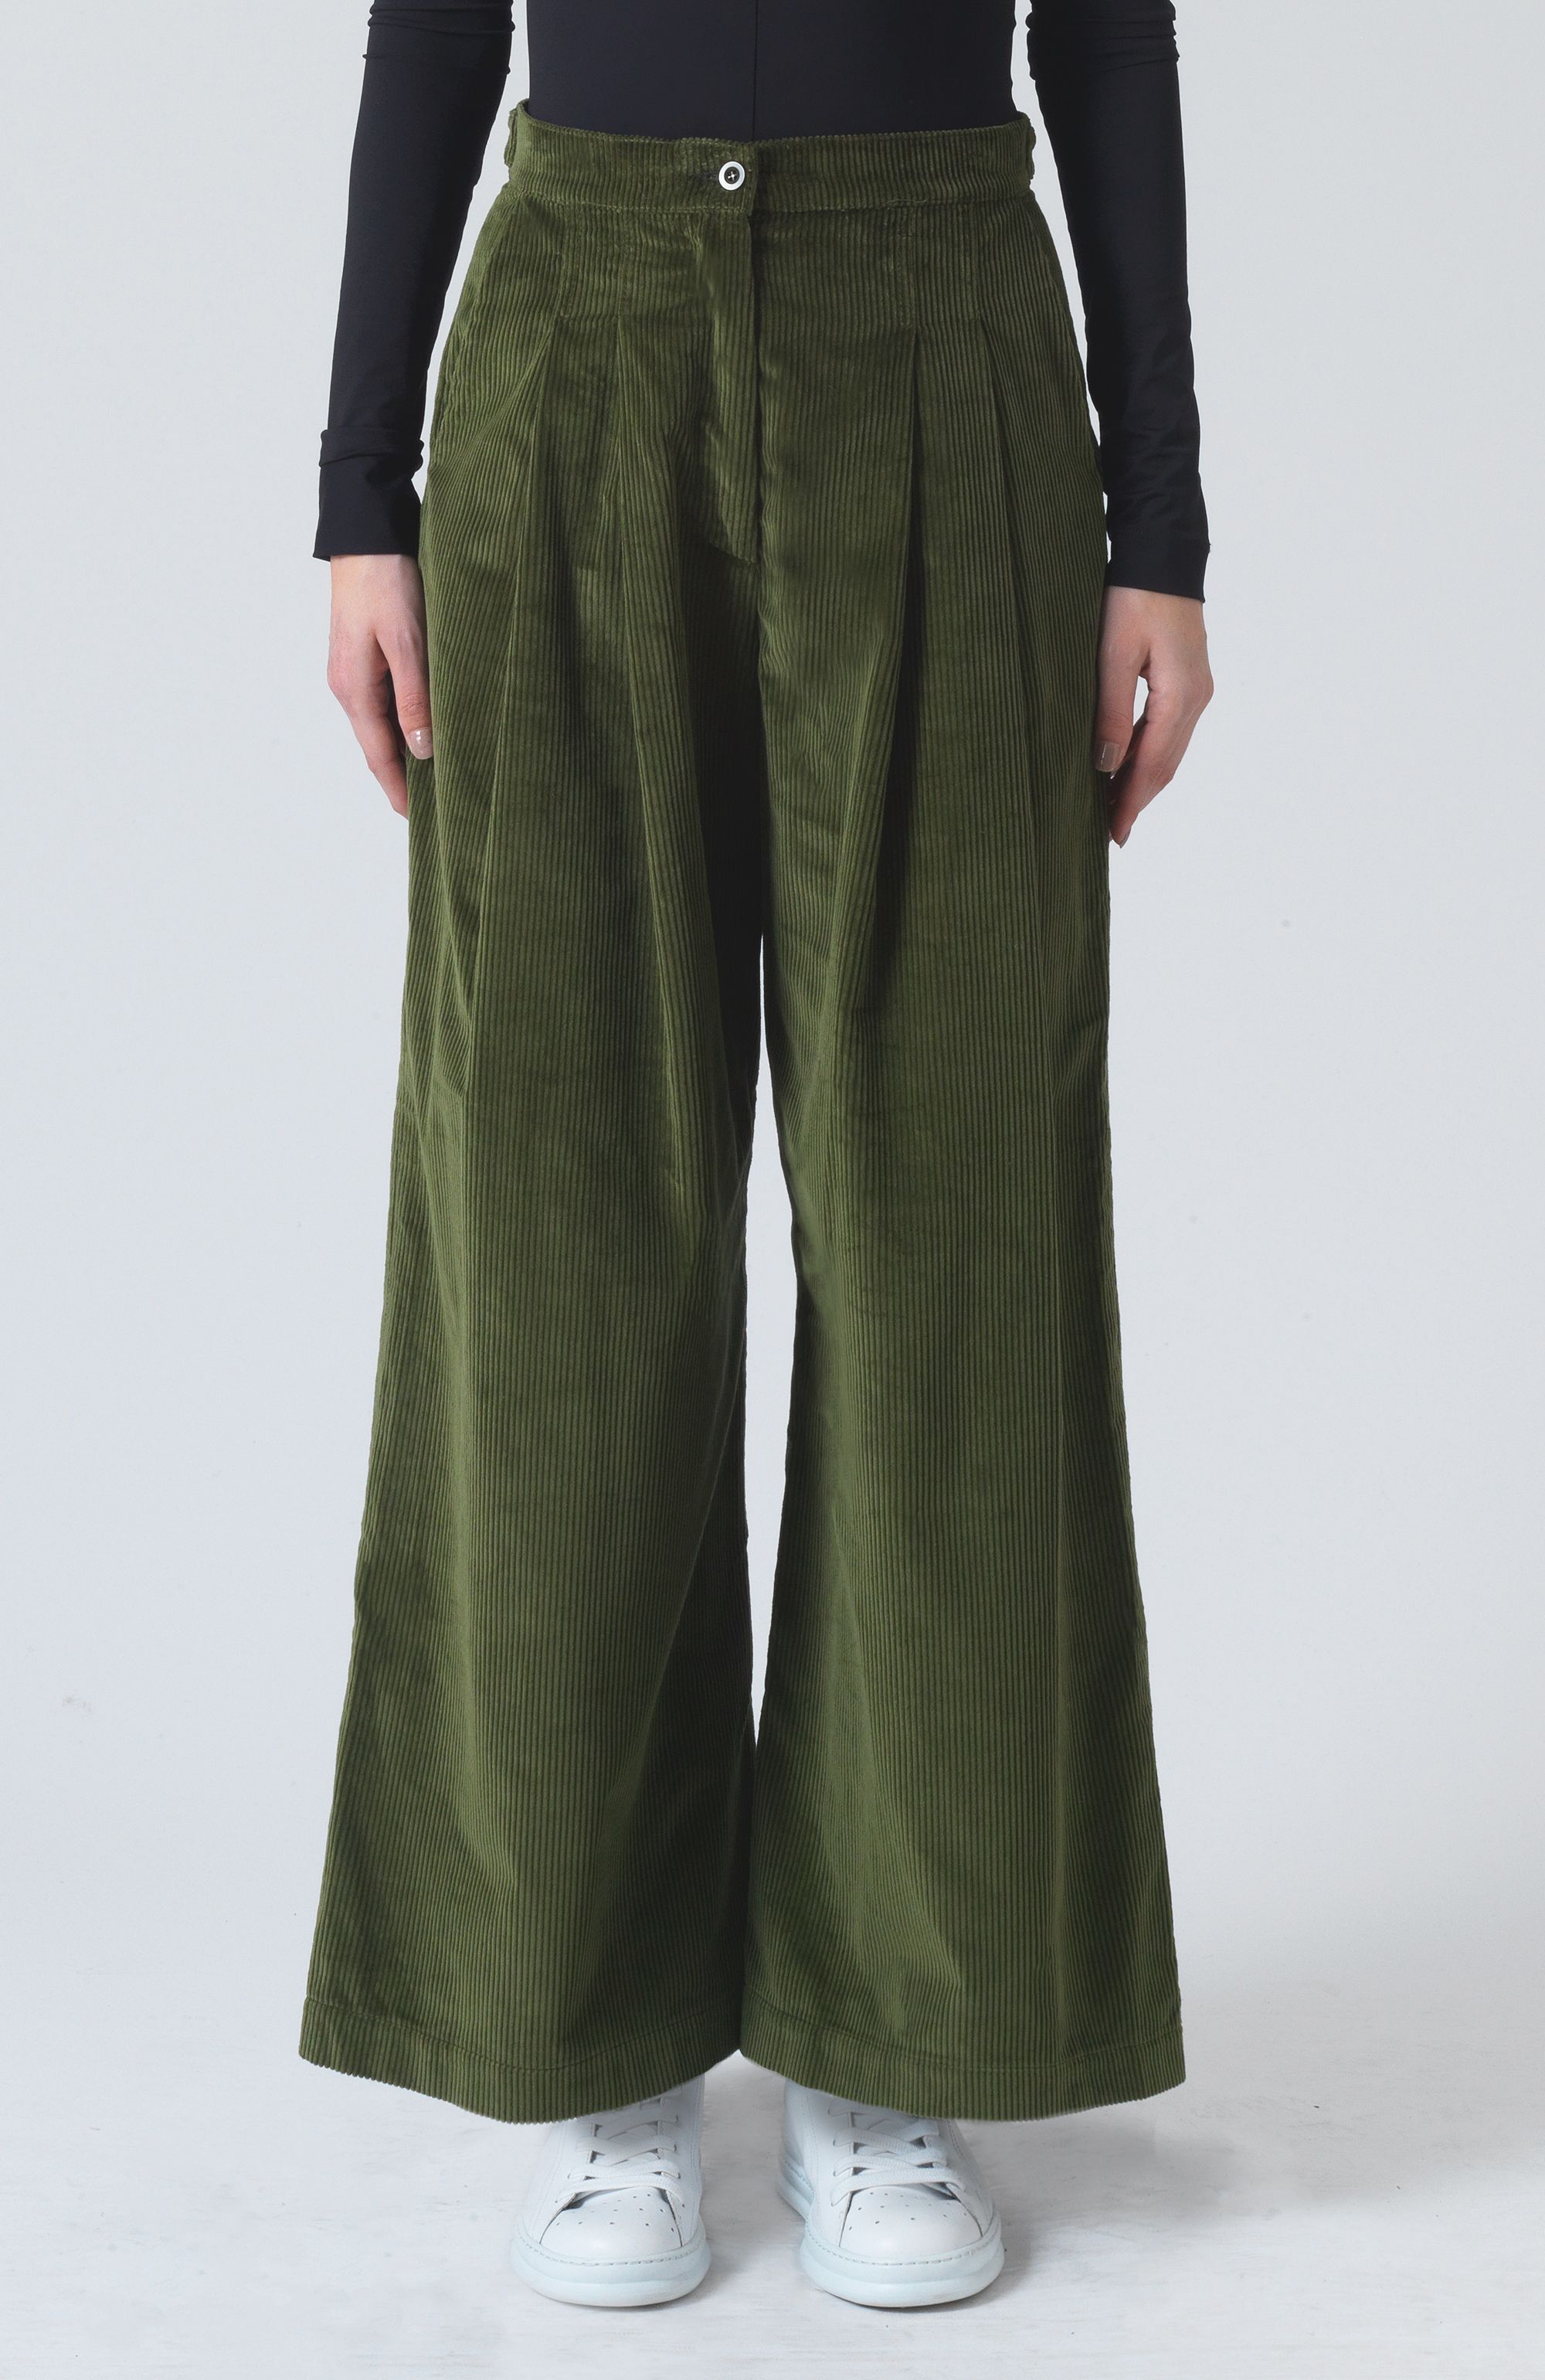 Katahrine Hamnett London - Ella Khaki Organic Cotton Trousers